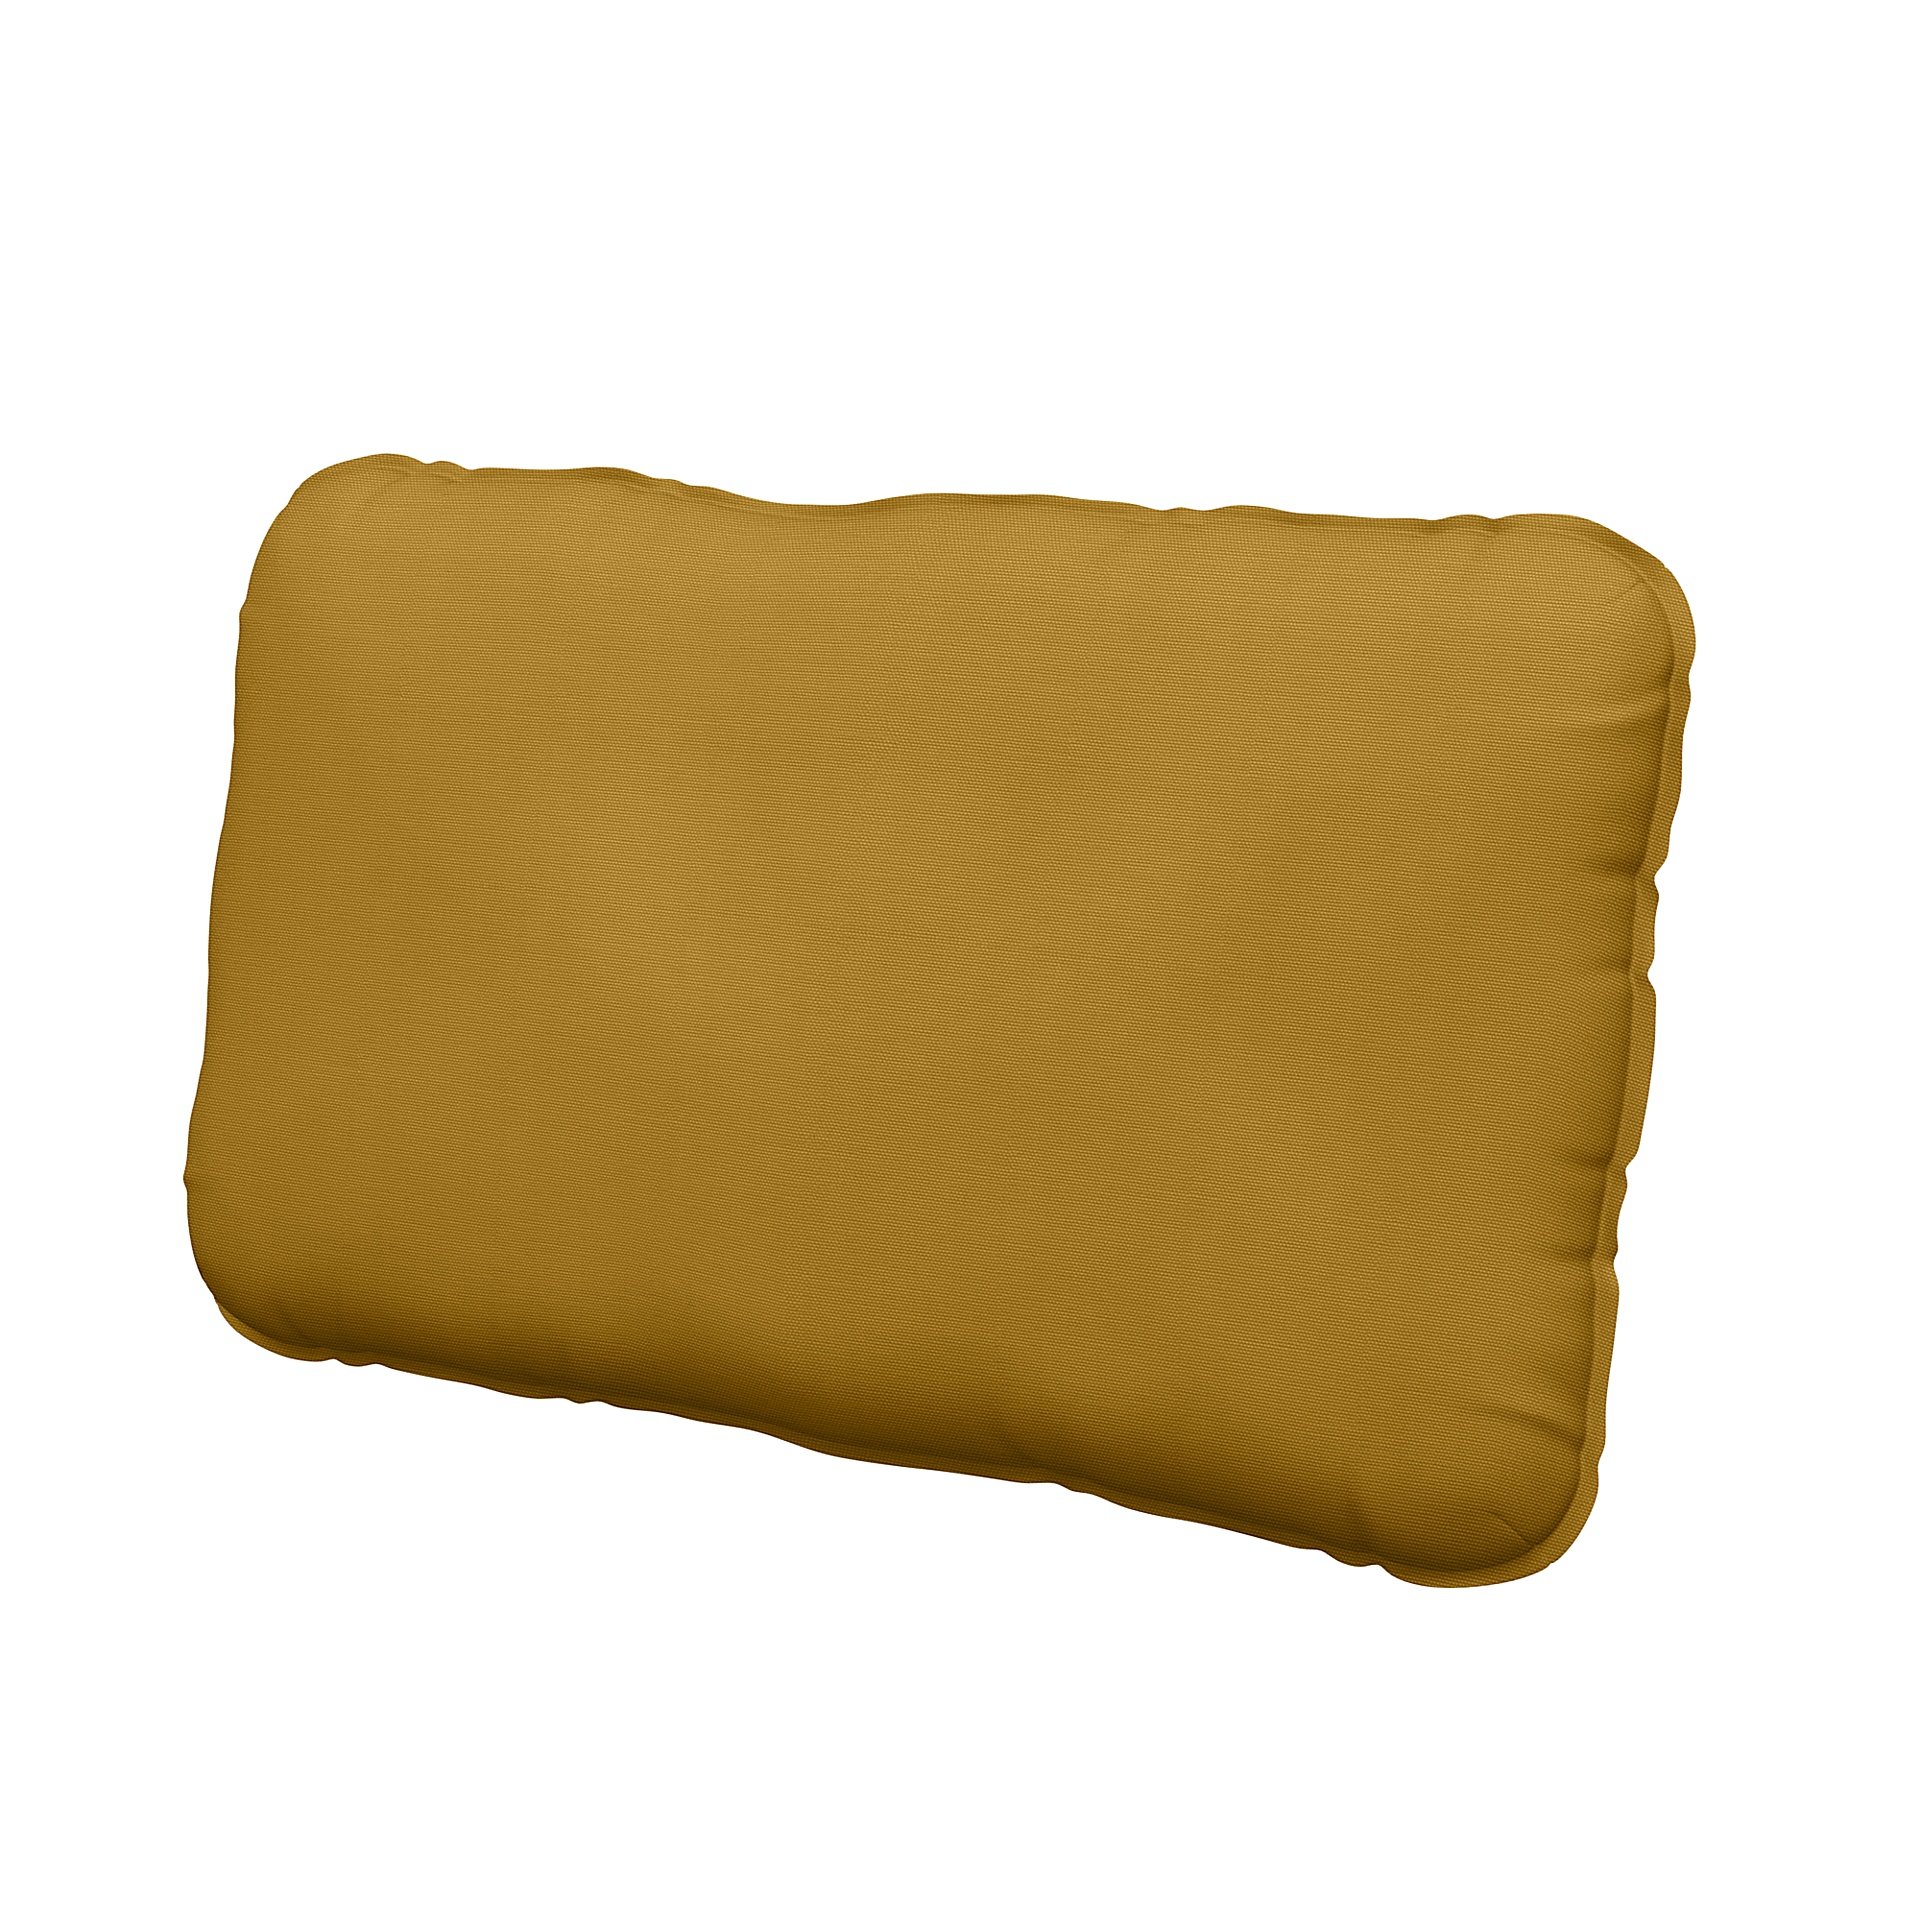 IKEA - Vallentuna back cushion cover 40x75cm, Honey Mustard, Cotton - Bemz